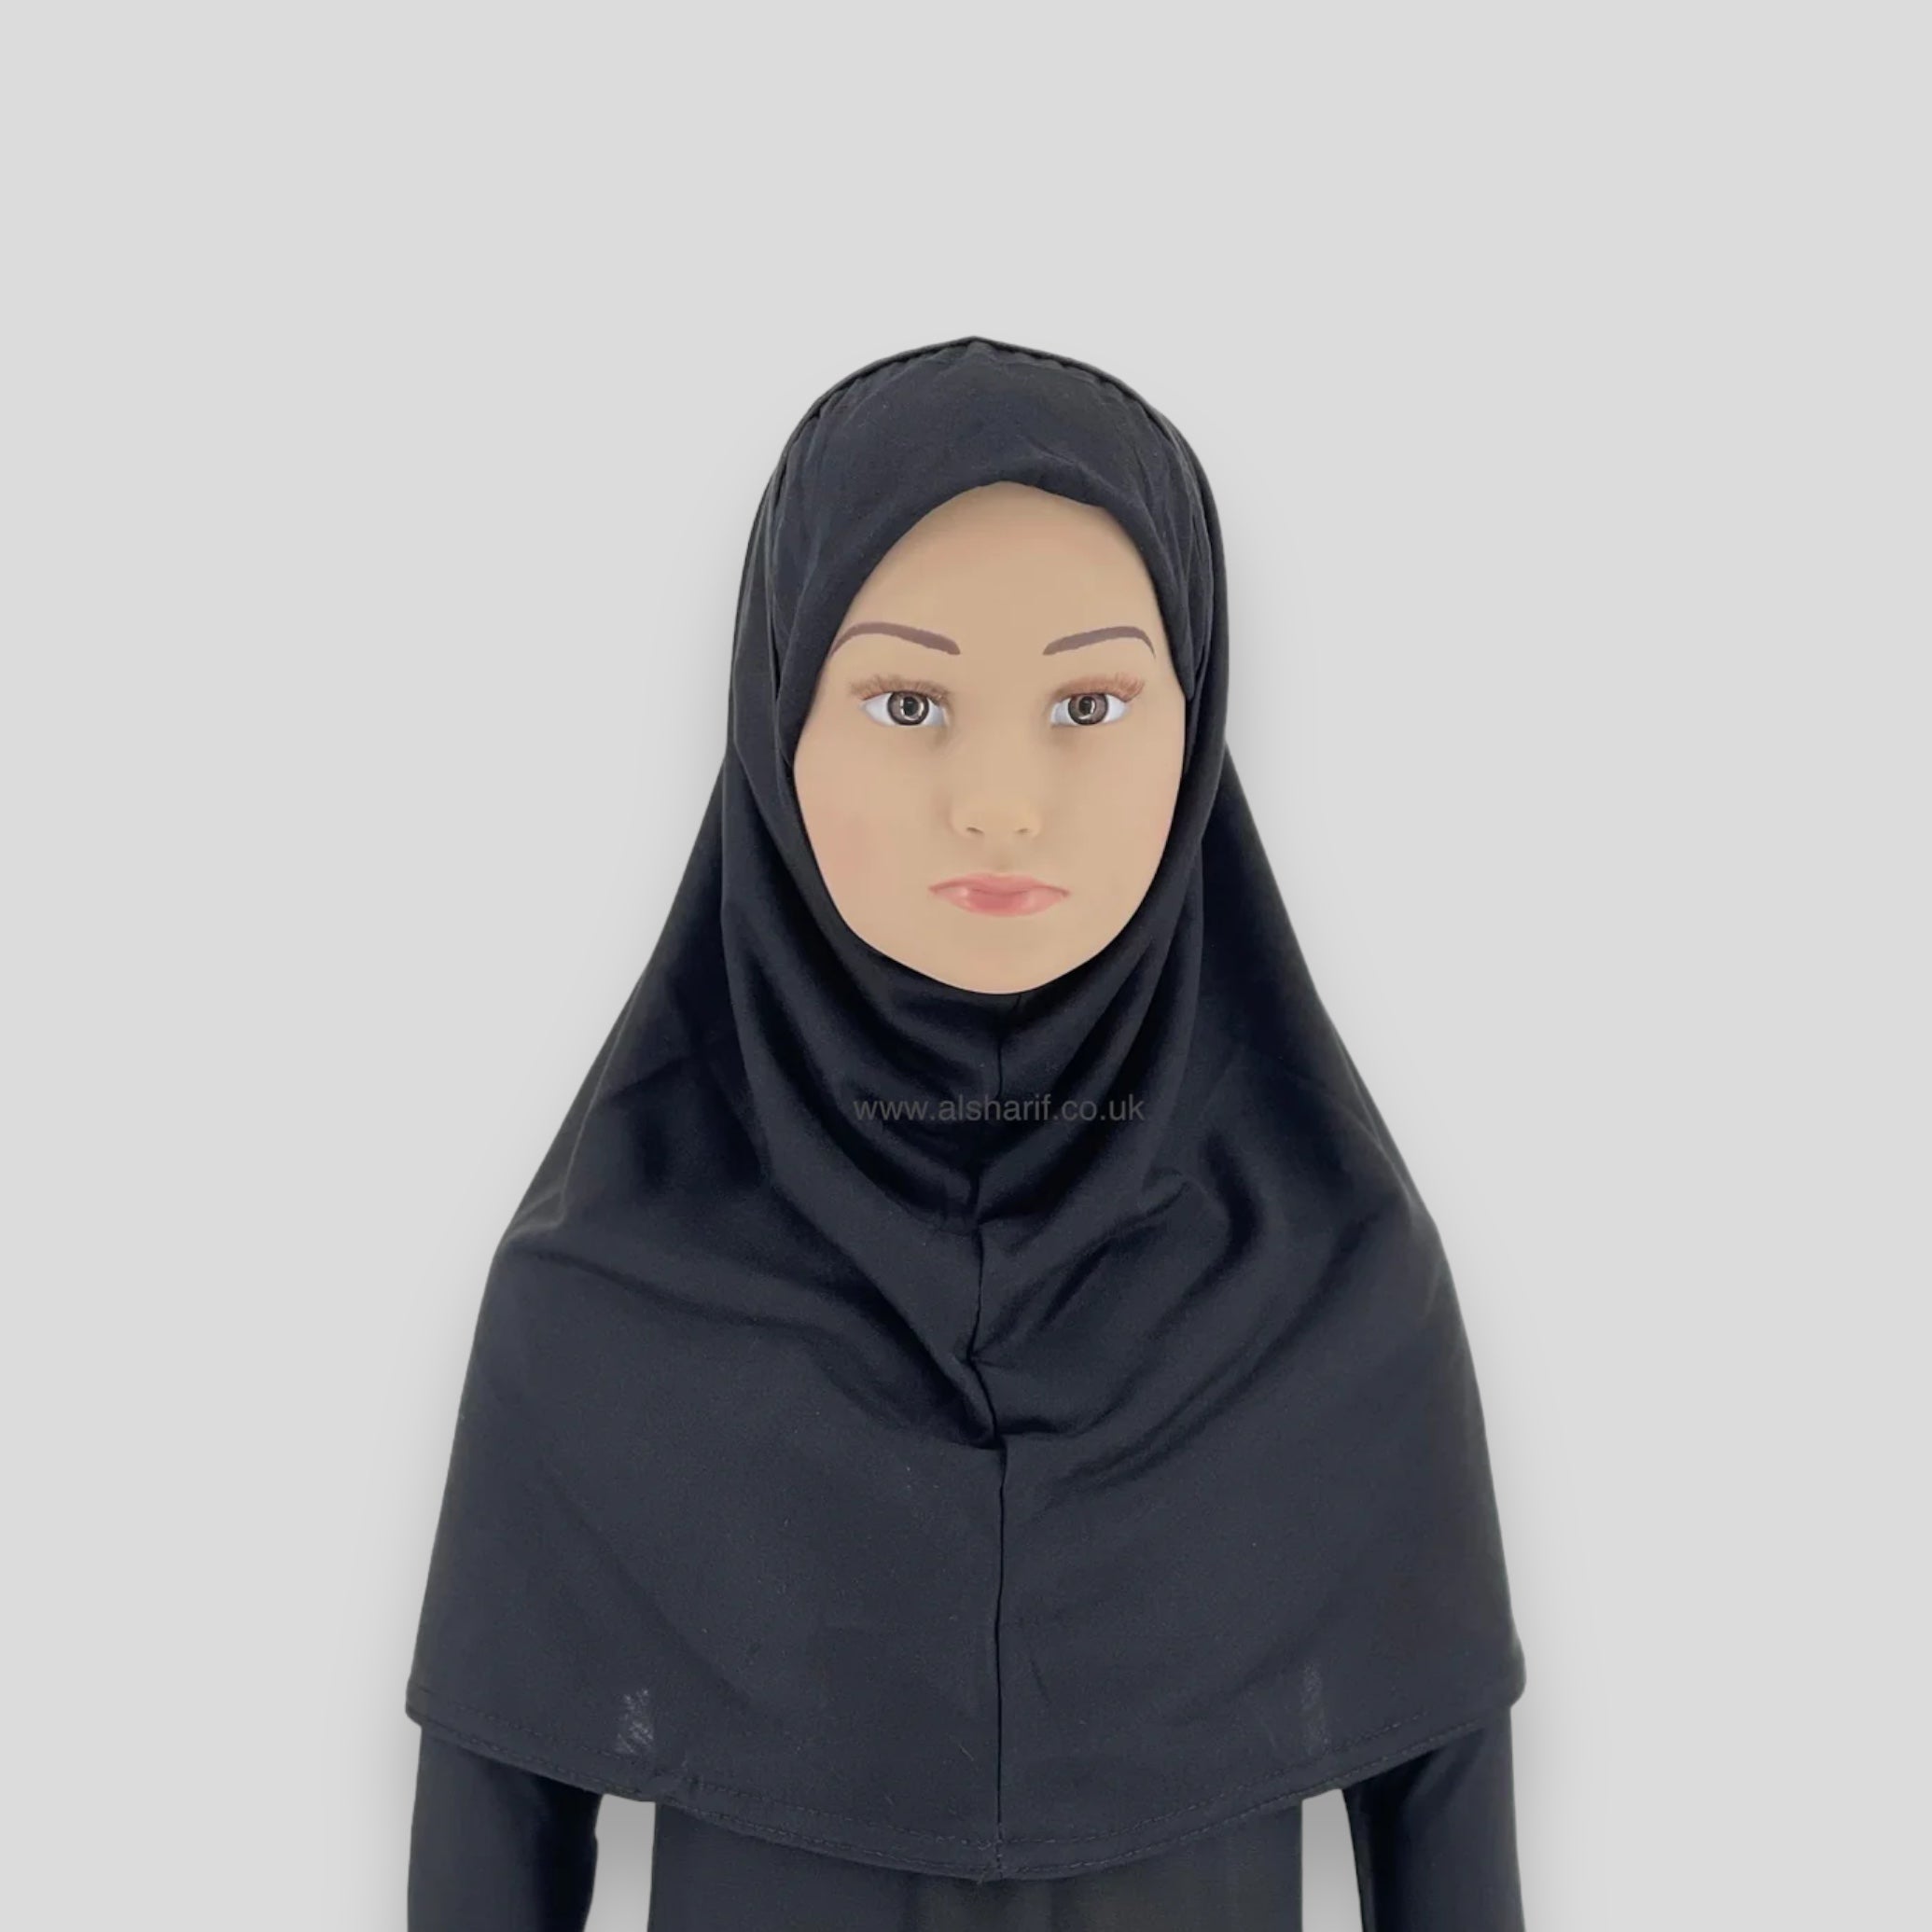 Girls Hijabs Size Small/Medium